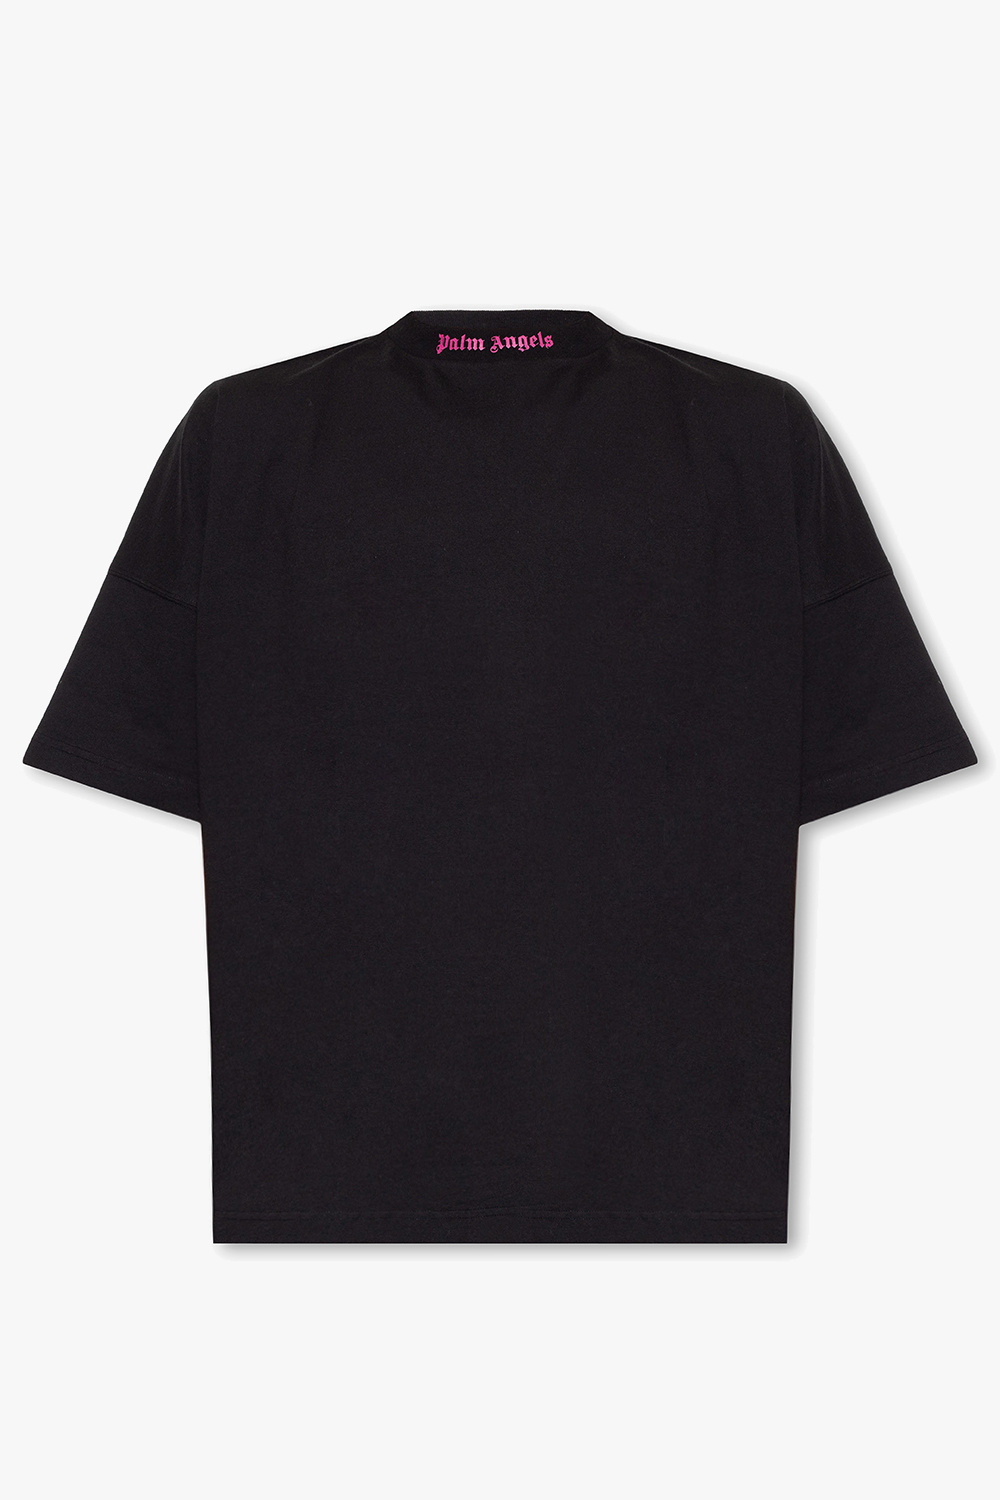 Palm Angels Logo Oversized T-shirt Black/Pink - The Shoe Box